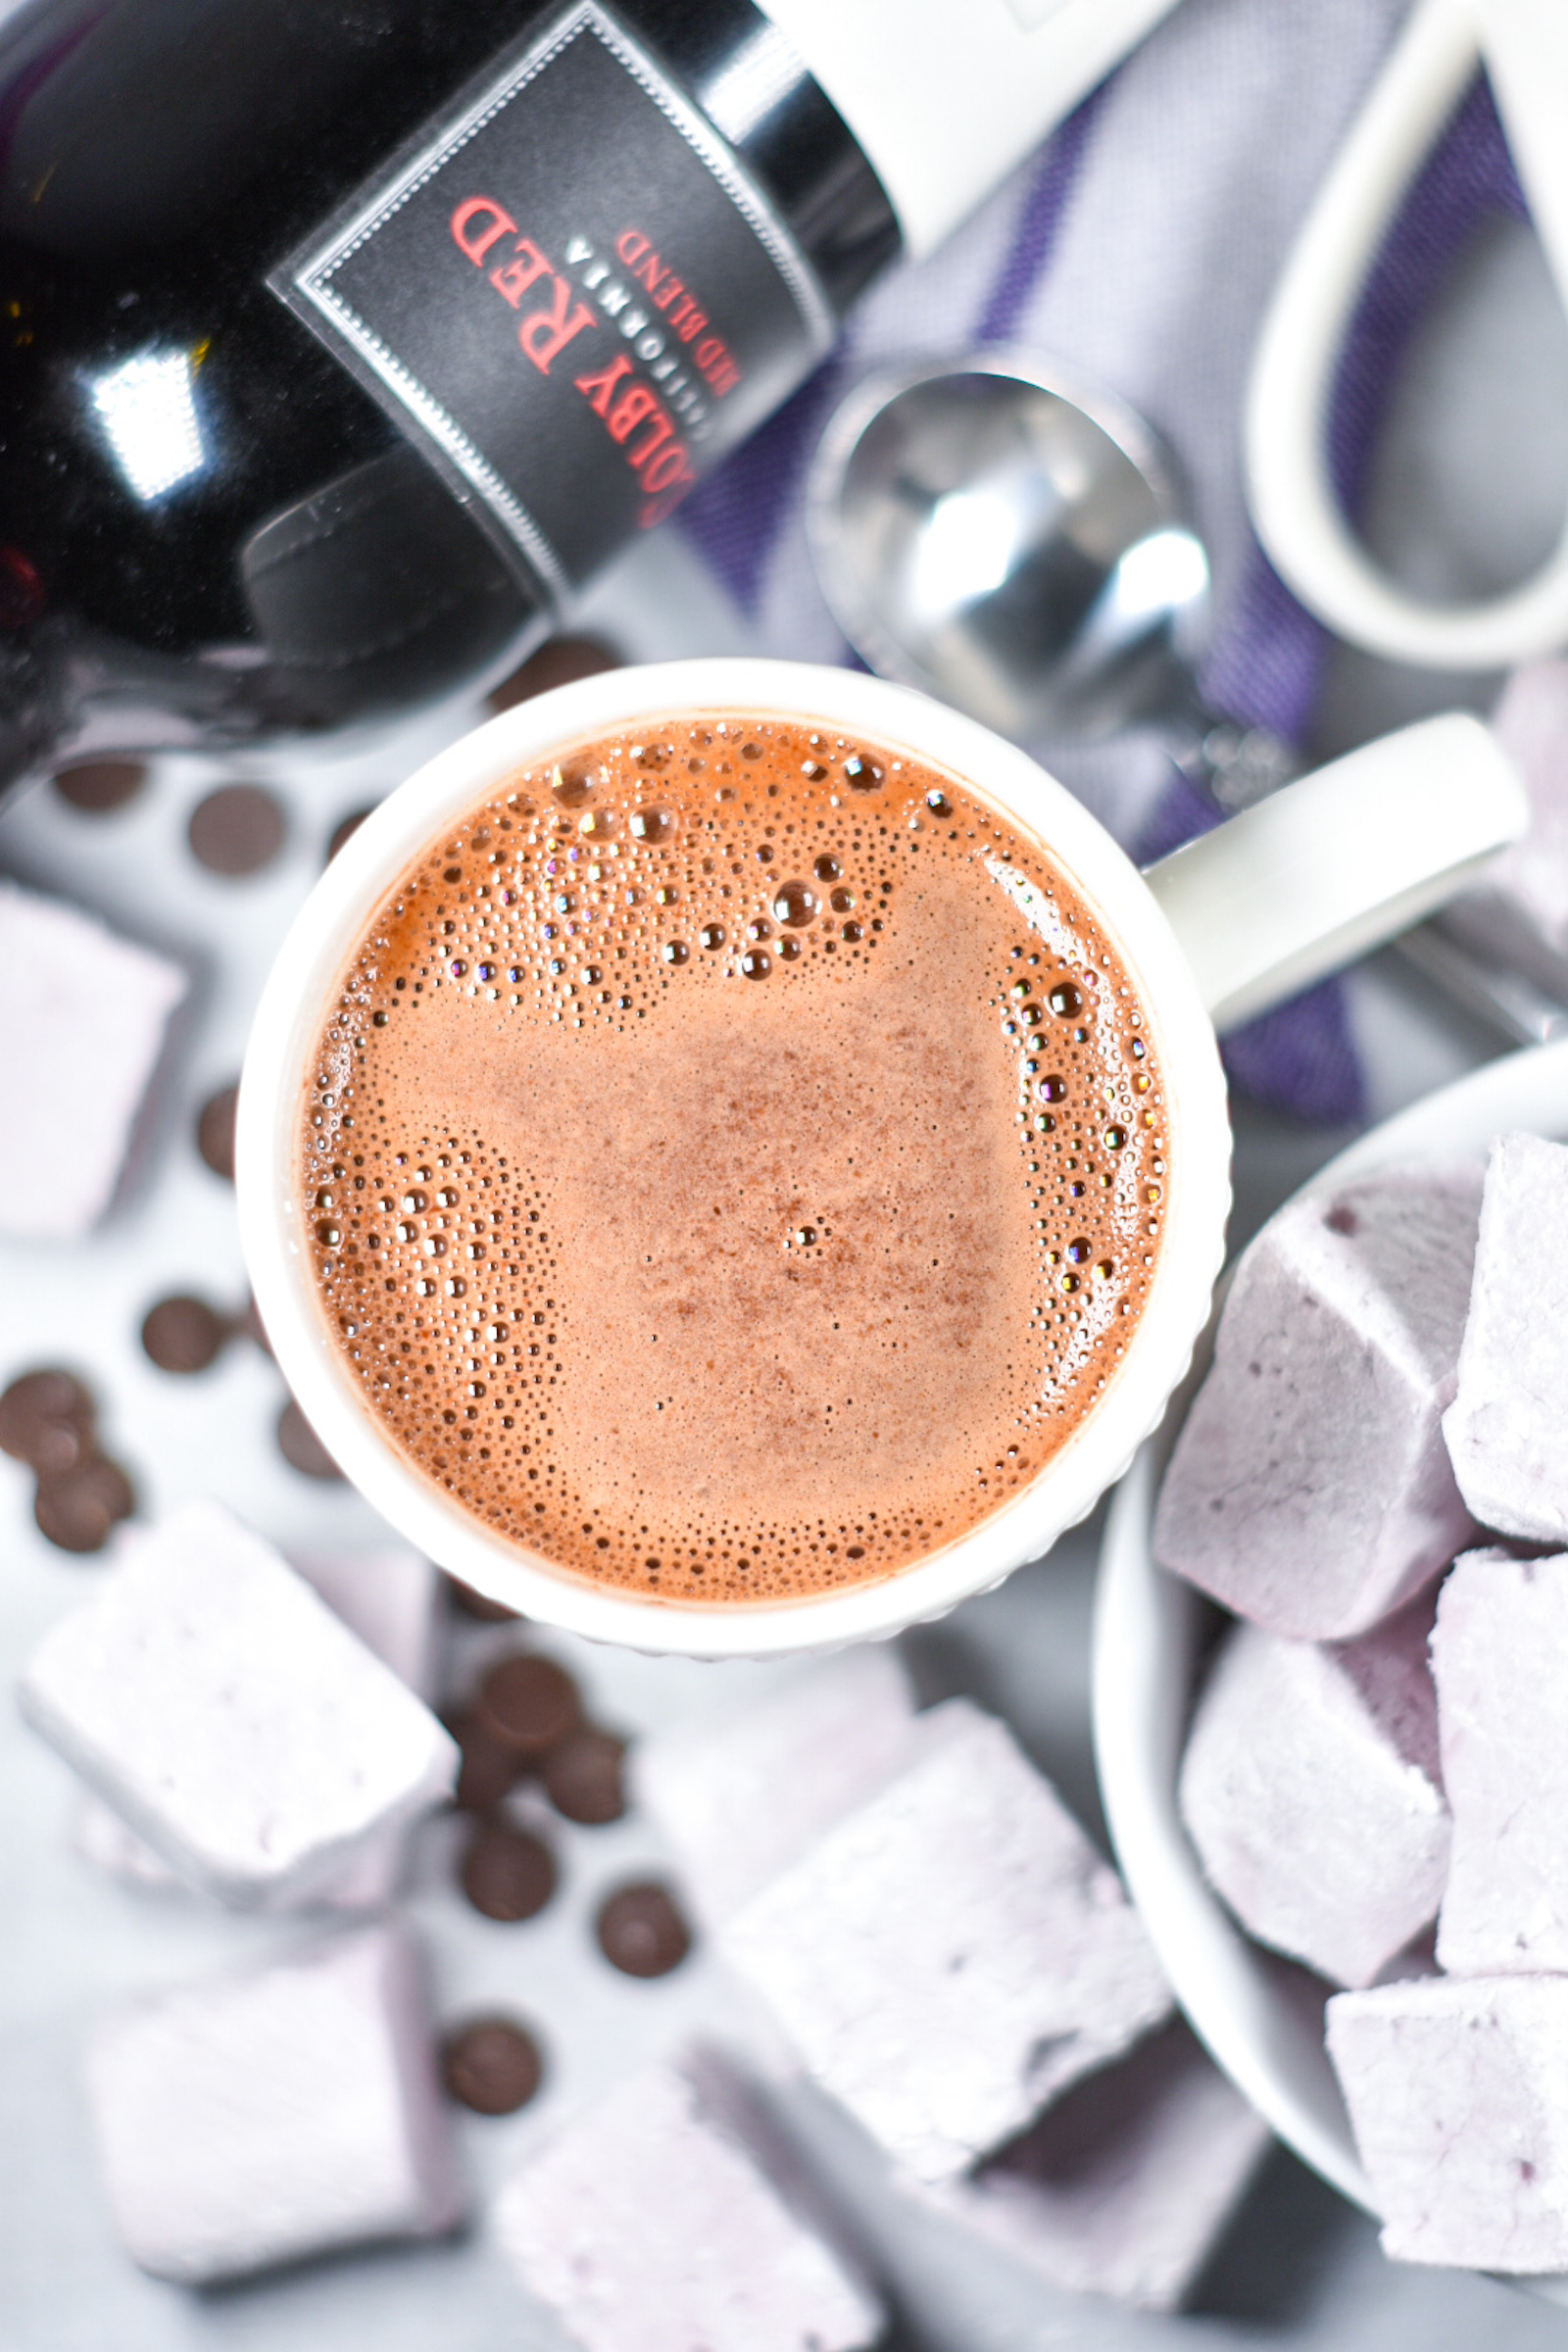 Lindt Patisserie Milk Hot Chocolate Mix